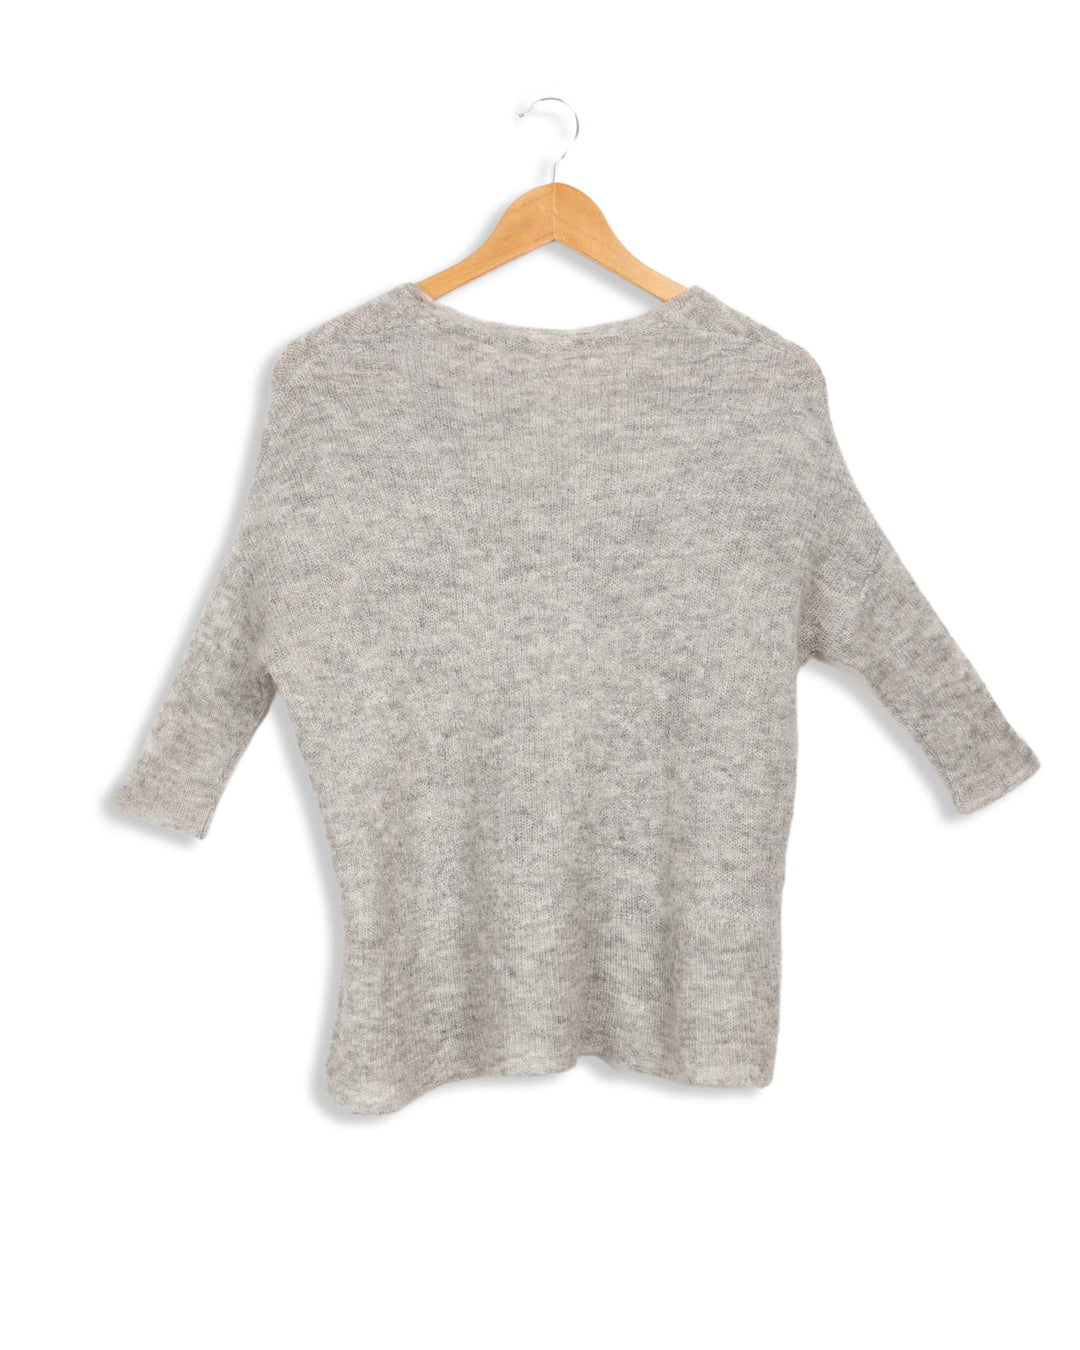 American Vintage gray 3/4 sleeve sweater - S